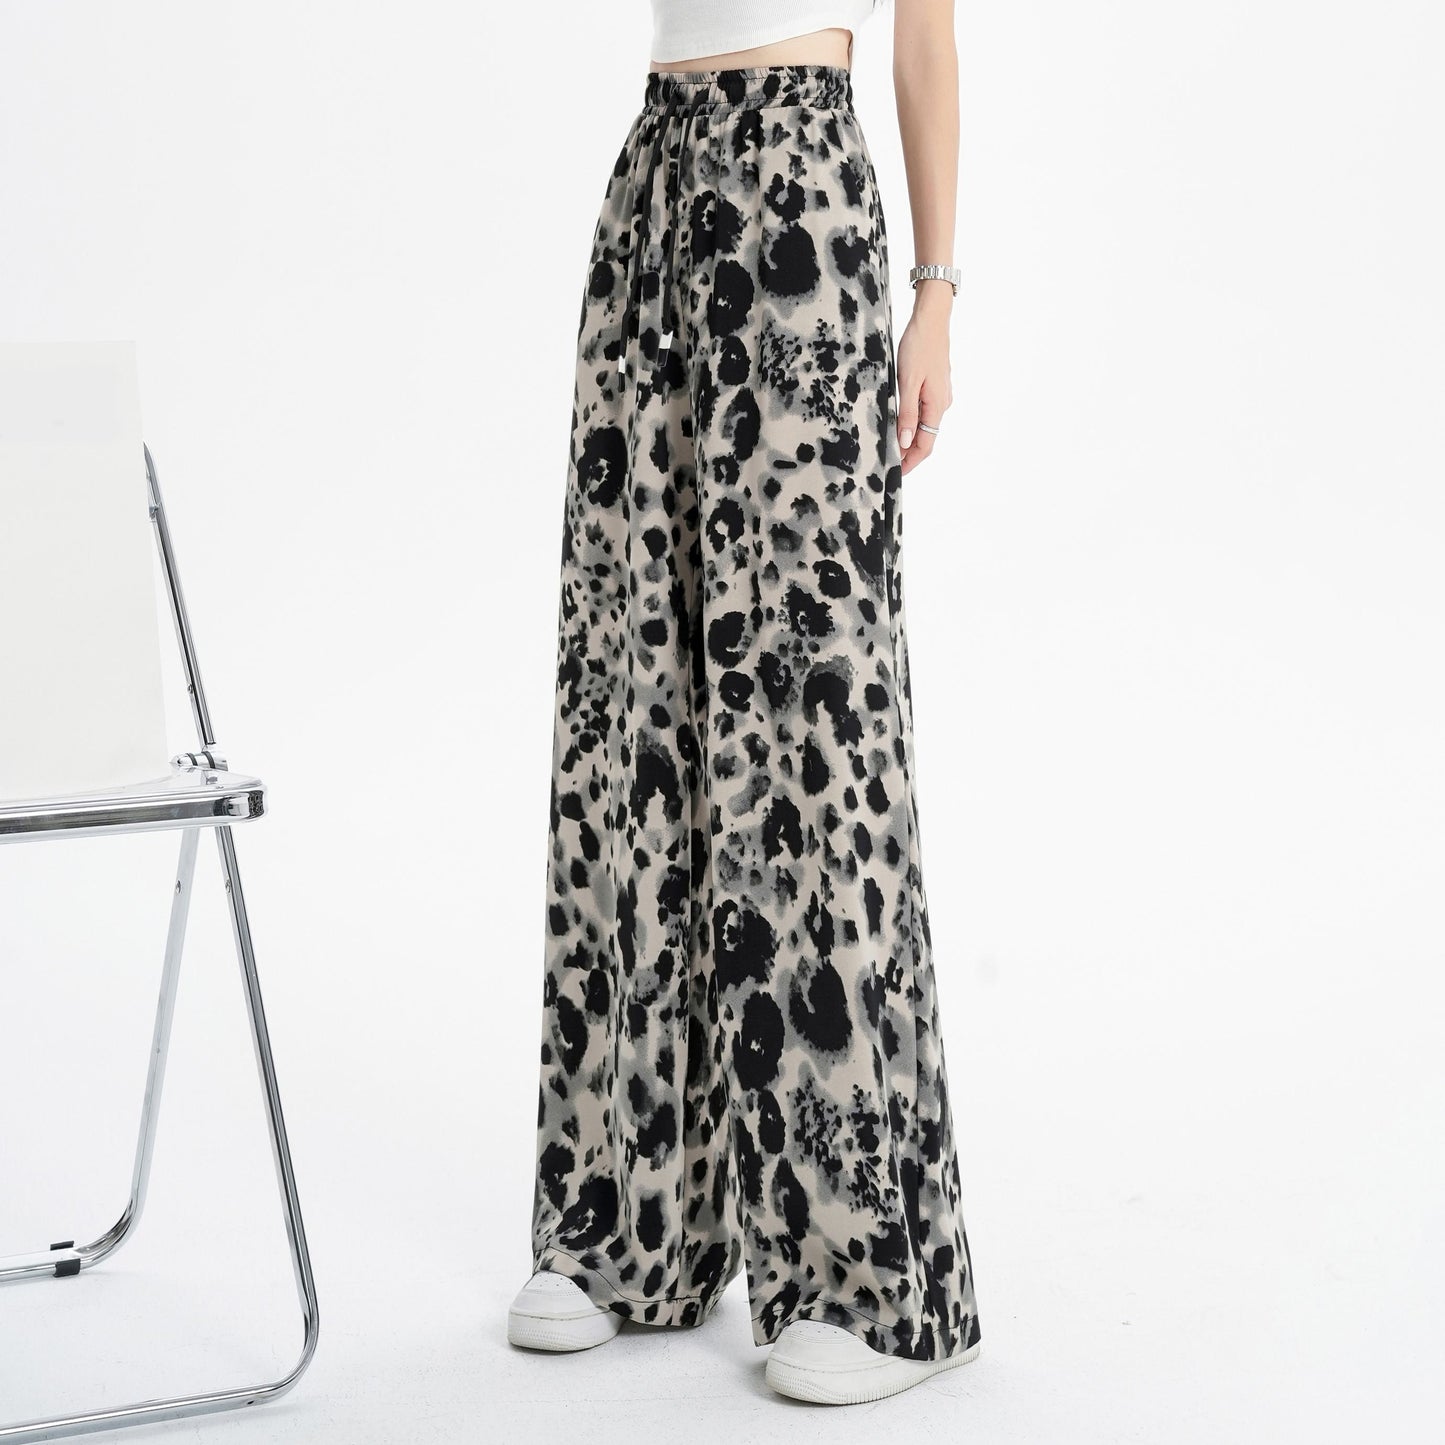 Silky Draping Loose-Fit Leopard-Print Chiffon Tie-Dye Wide Leg Pants